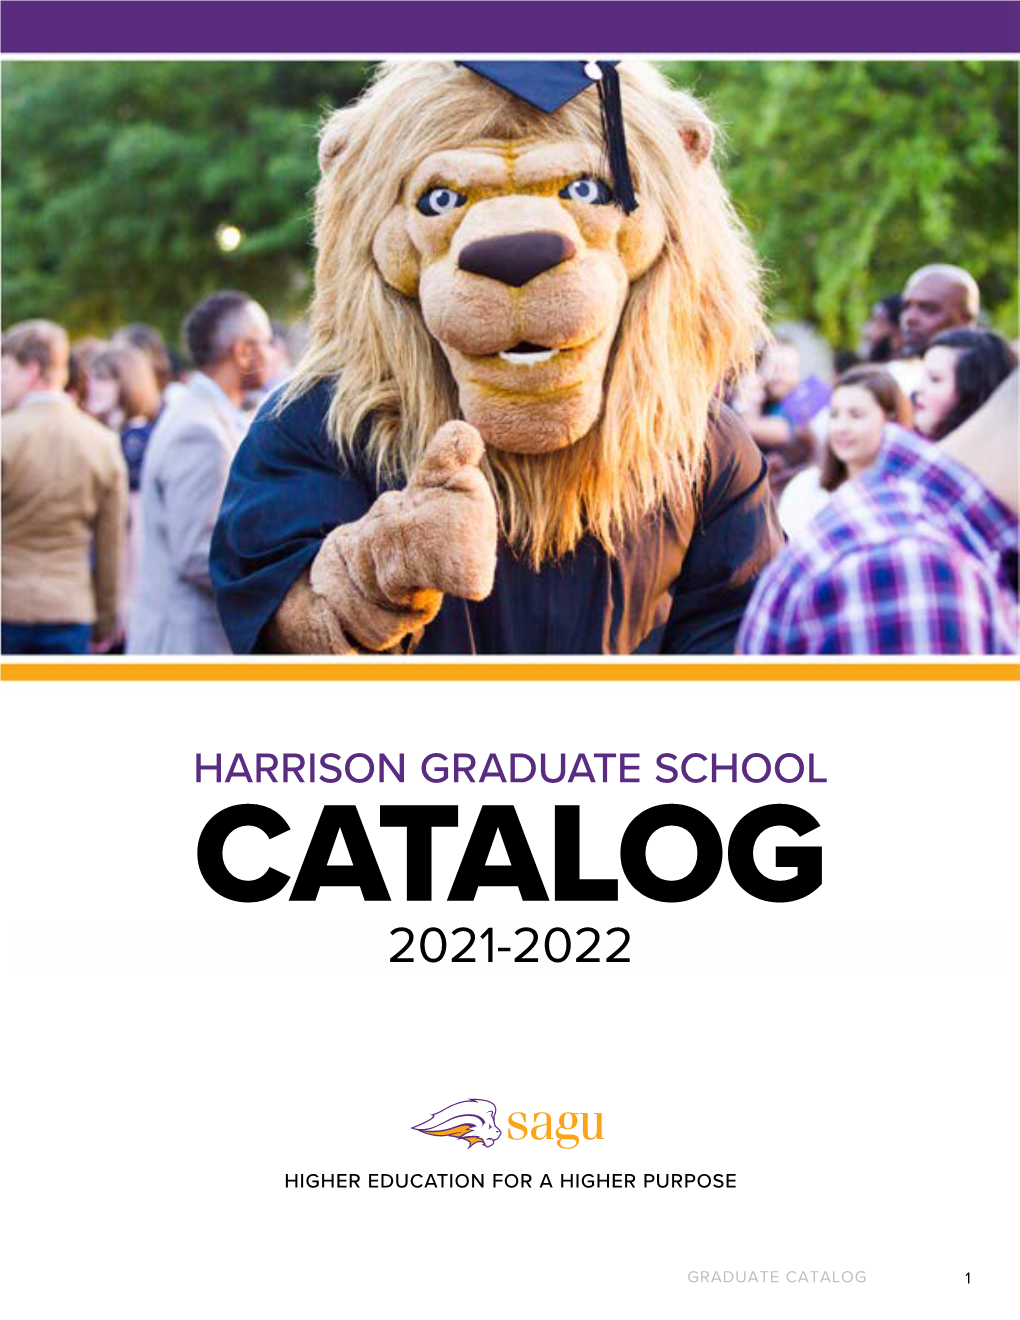 2021-2022 Graduate Catalog